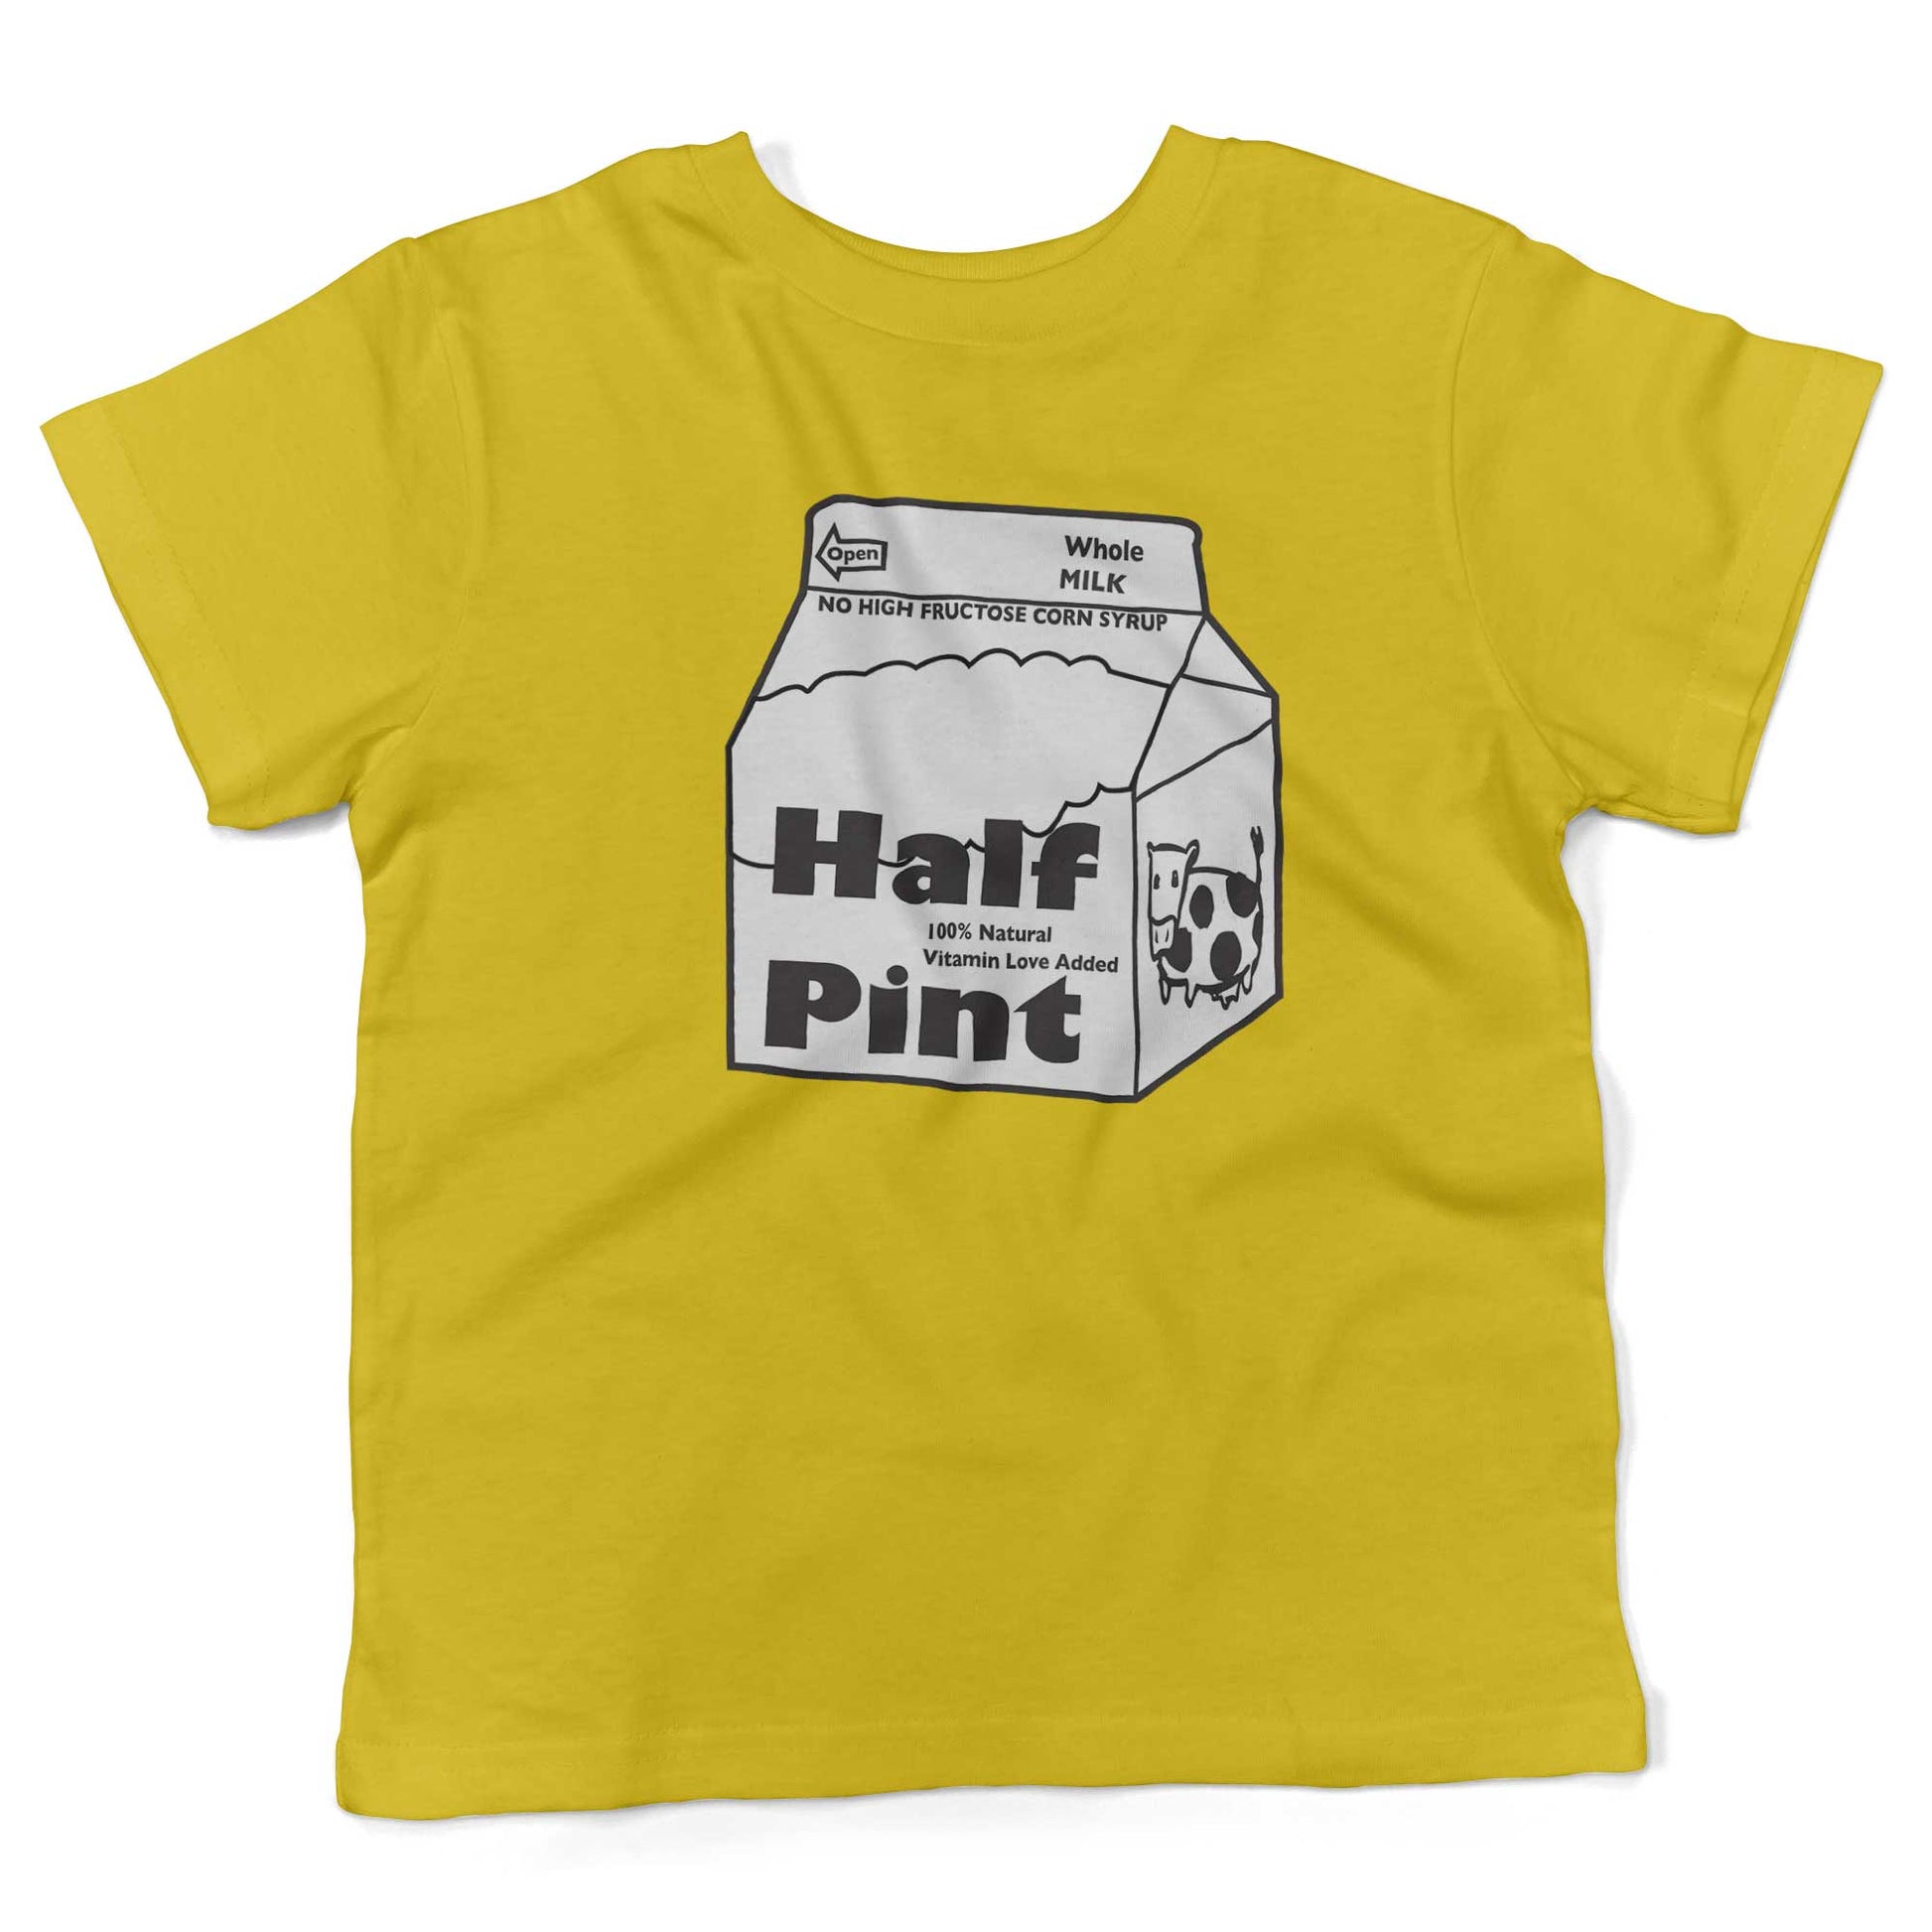 Half Pint Of Milk Toddler Shirt-Sunshine Yellow-2T